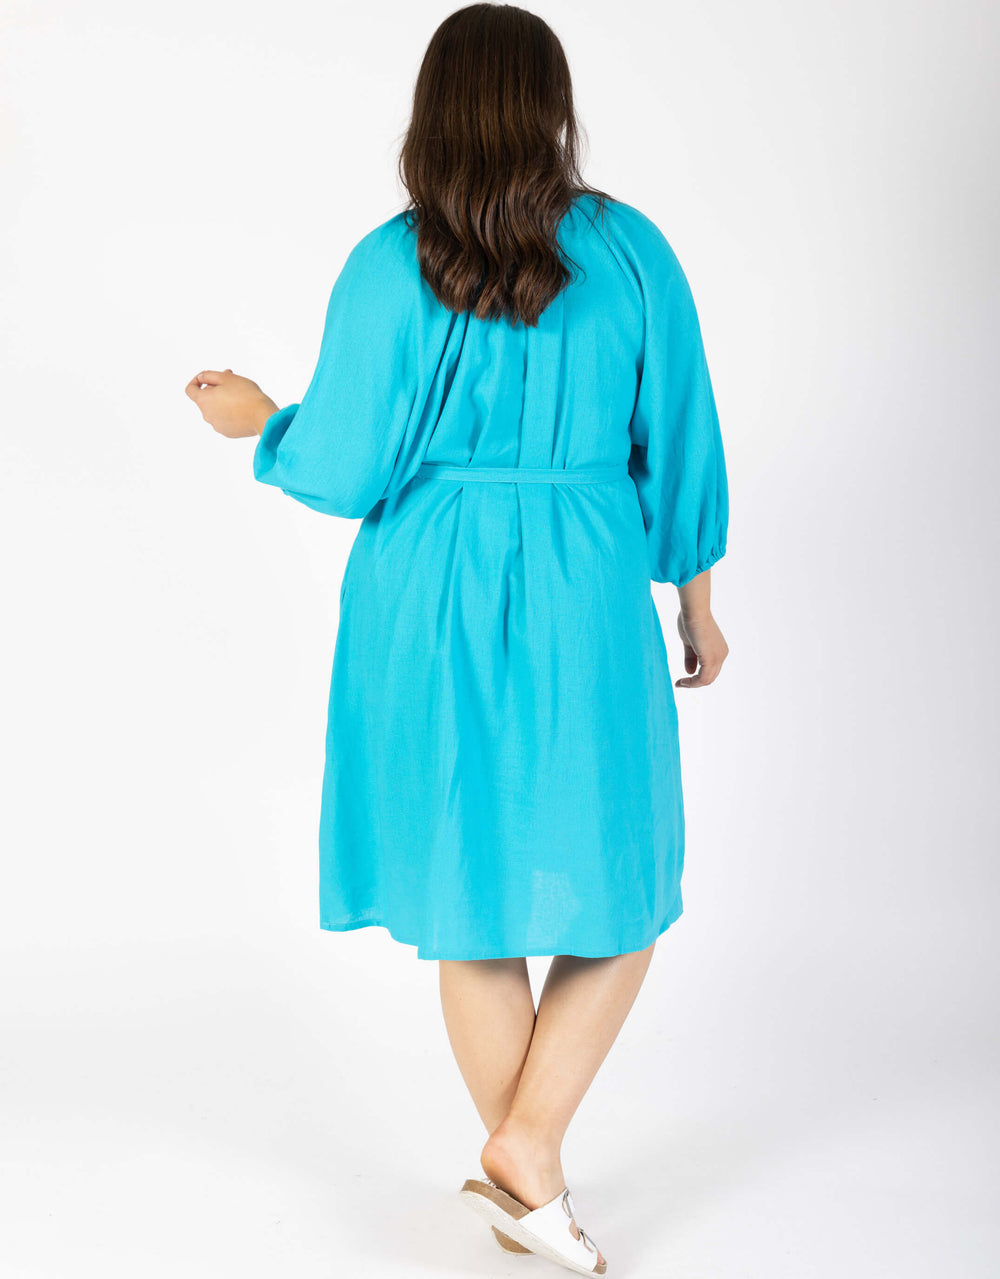 betty-basics-plus-size-penny-lane-dress-heavenly-blue-plus-size-clothing